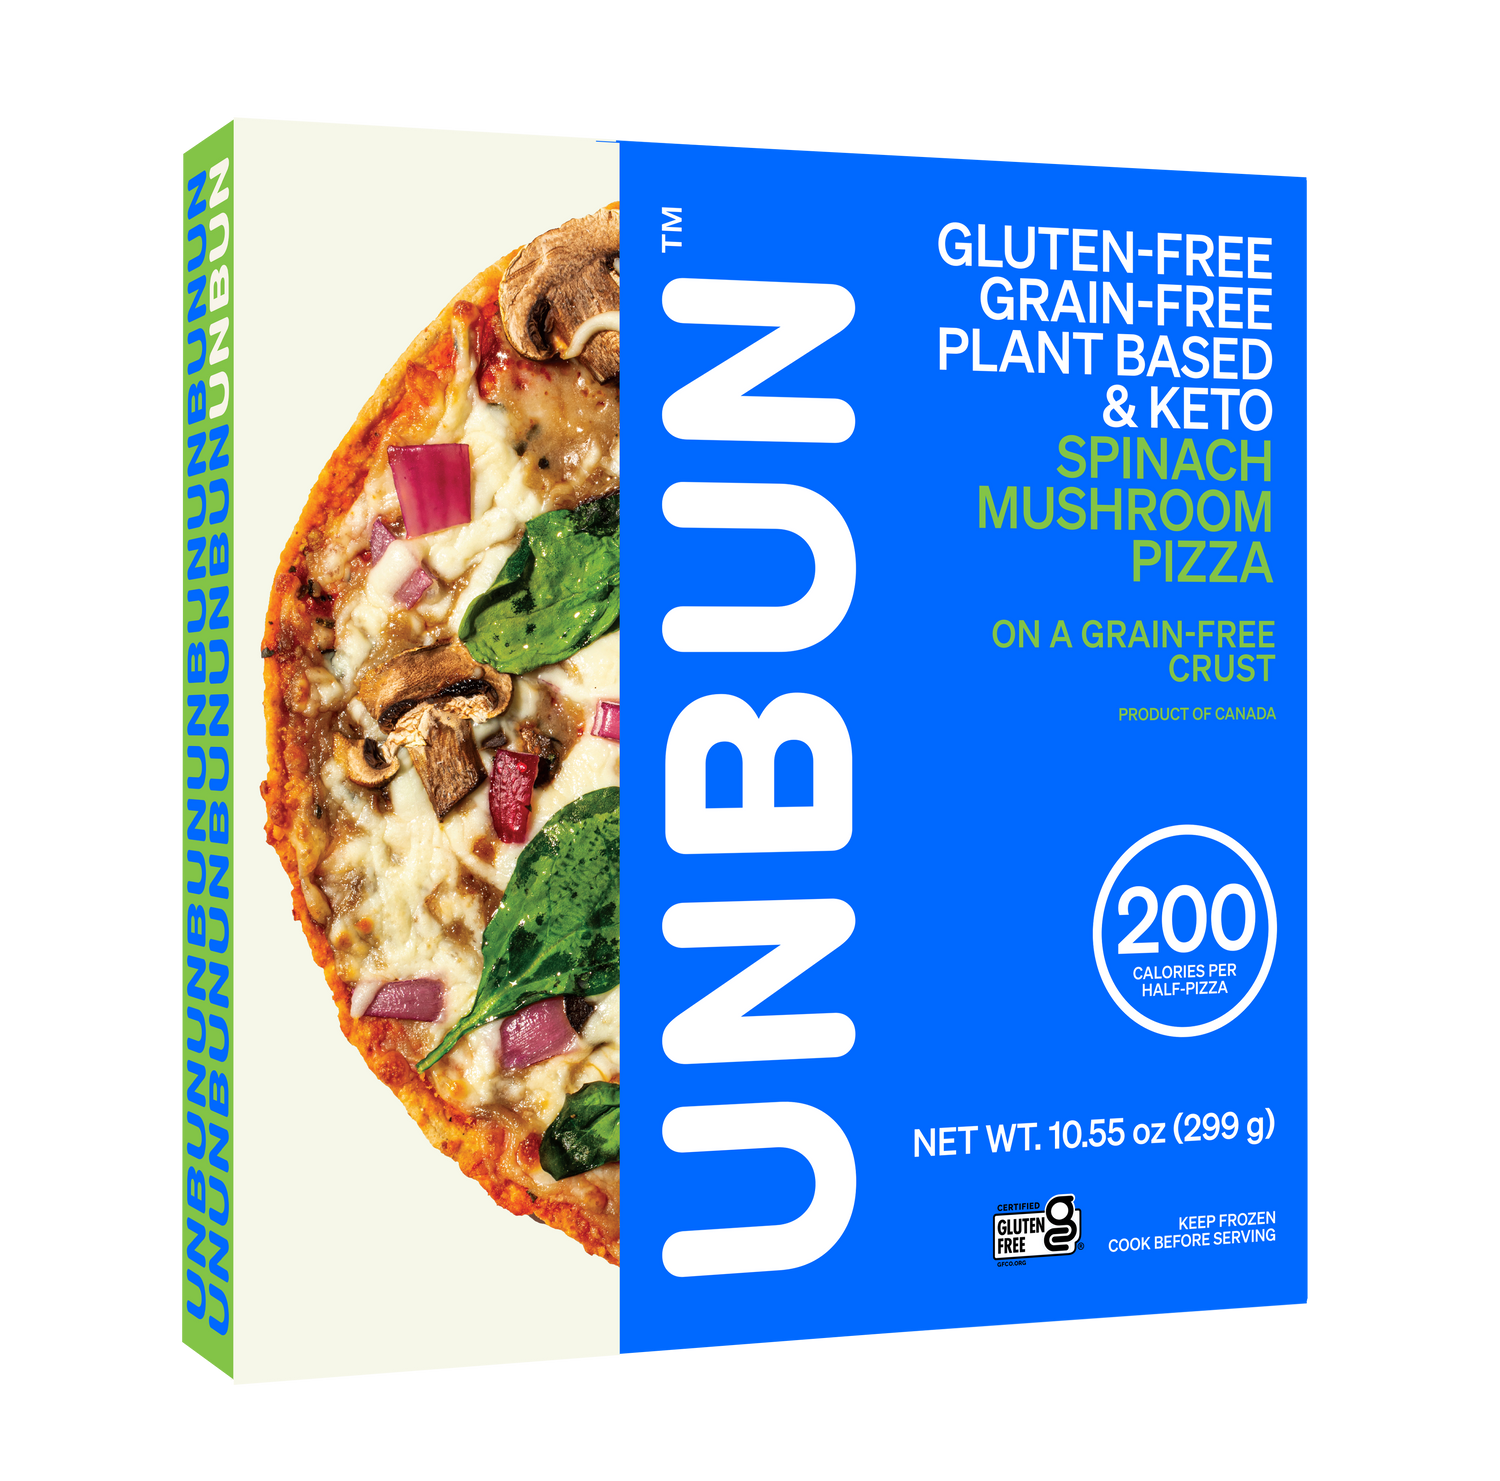 Unbun Spinach Mushroom Pizza (8-pack)